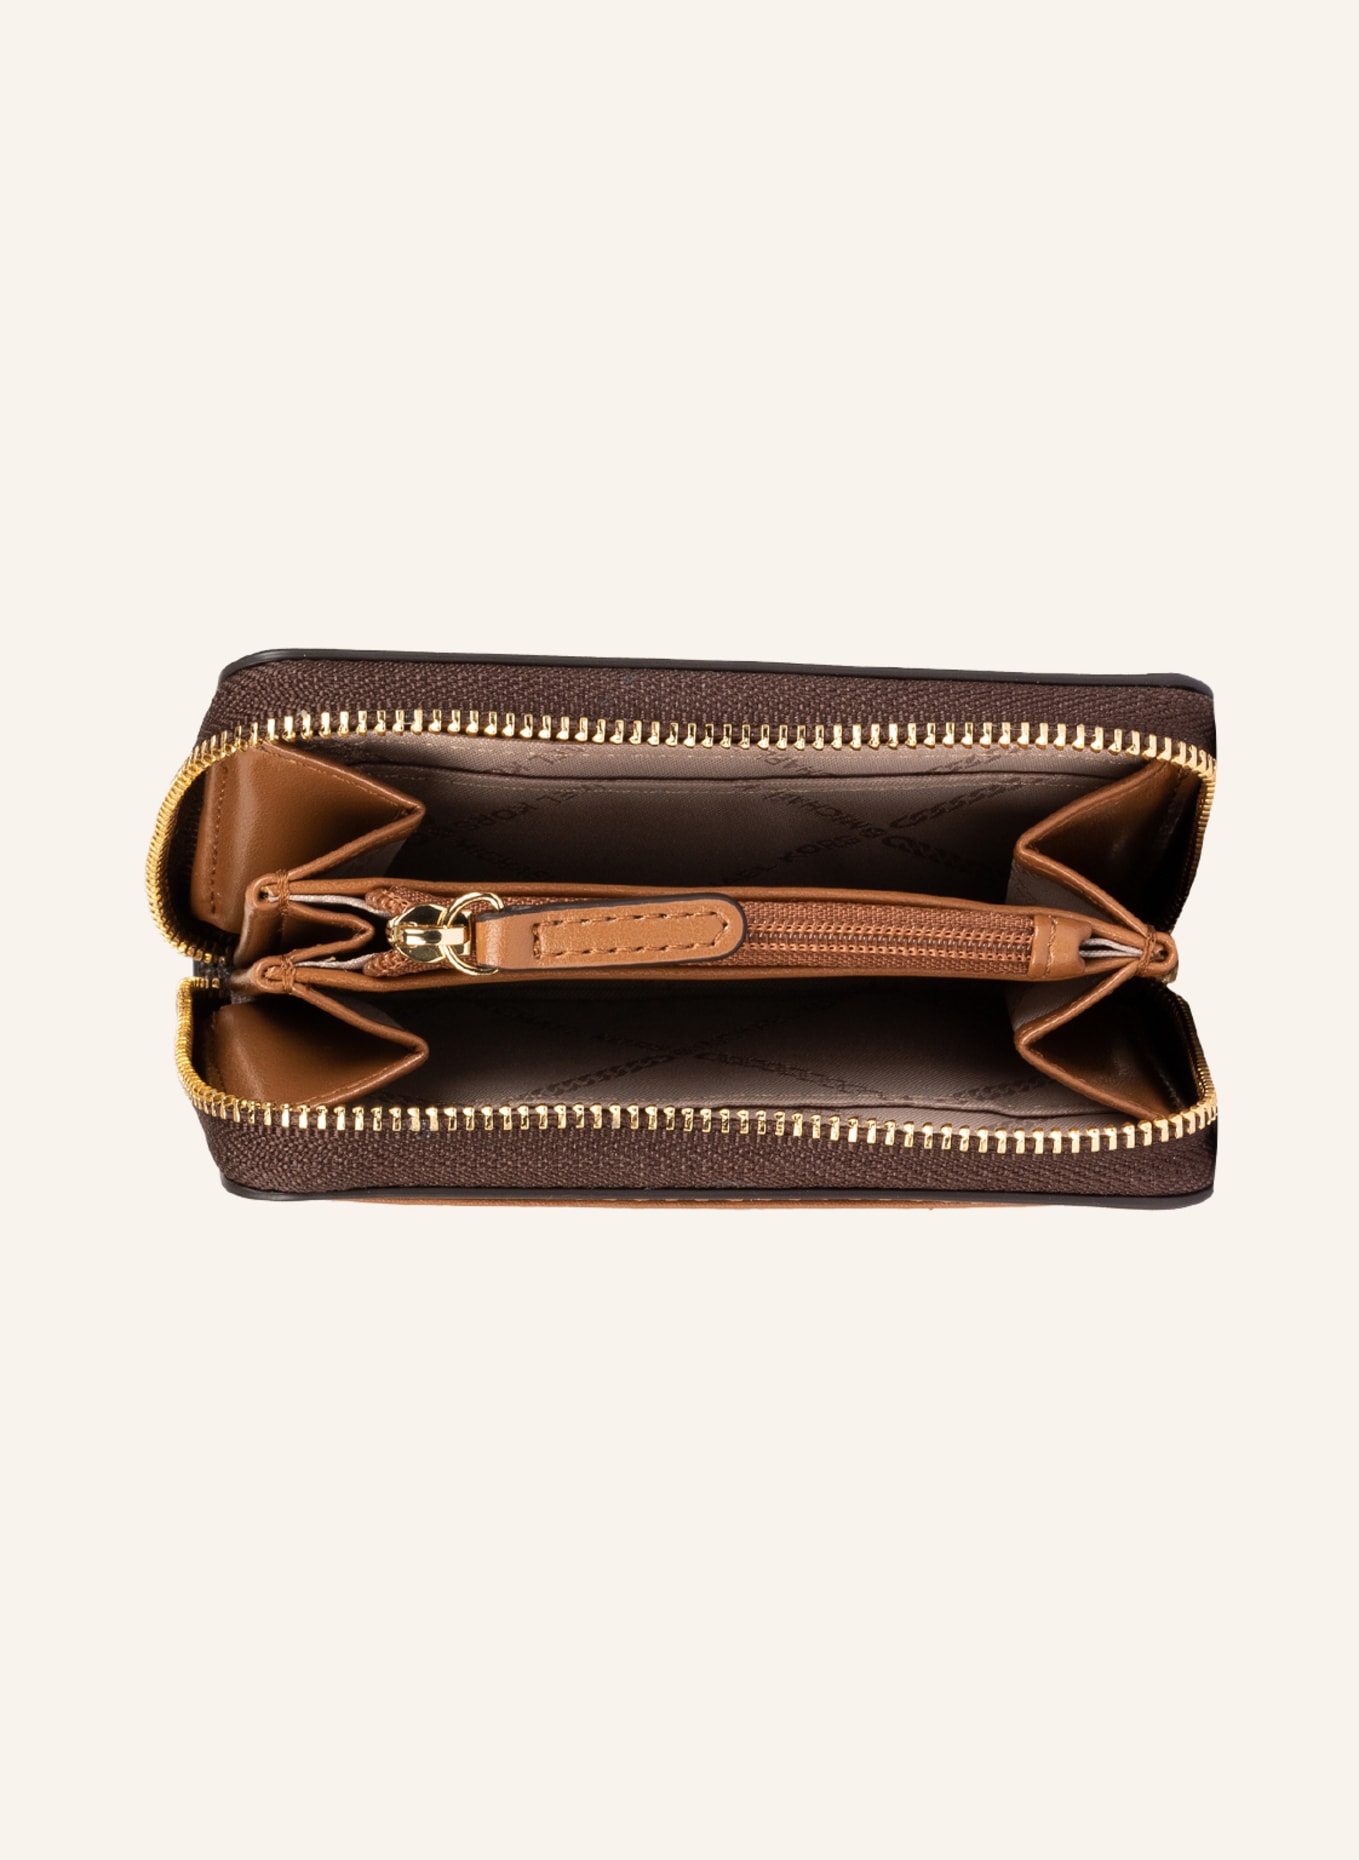 MICHAEL KORS Wallet JET SET SMALL in brown/ light brown